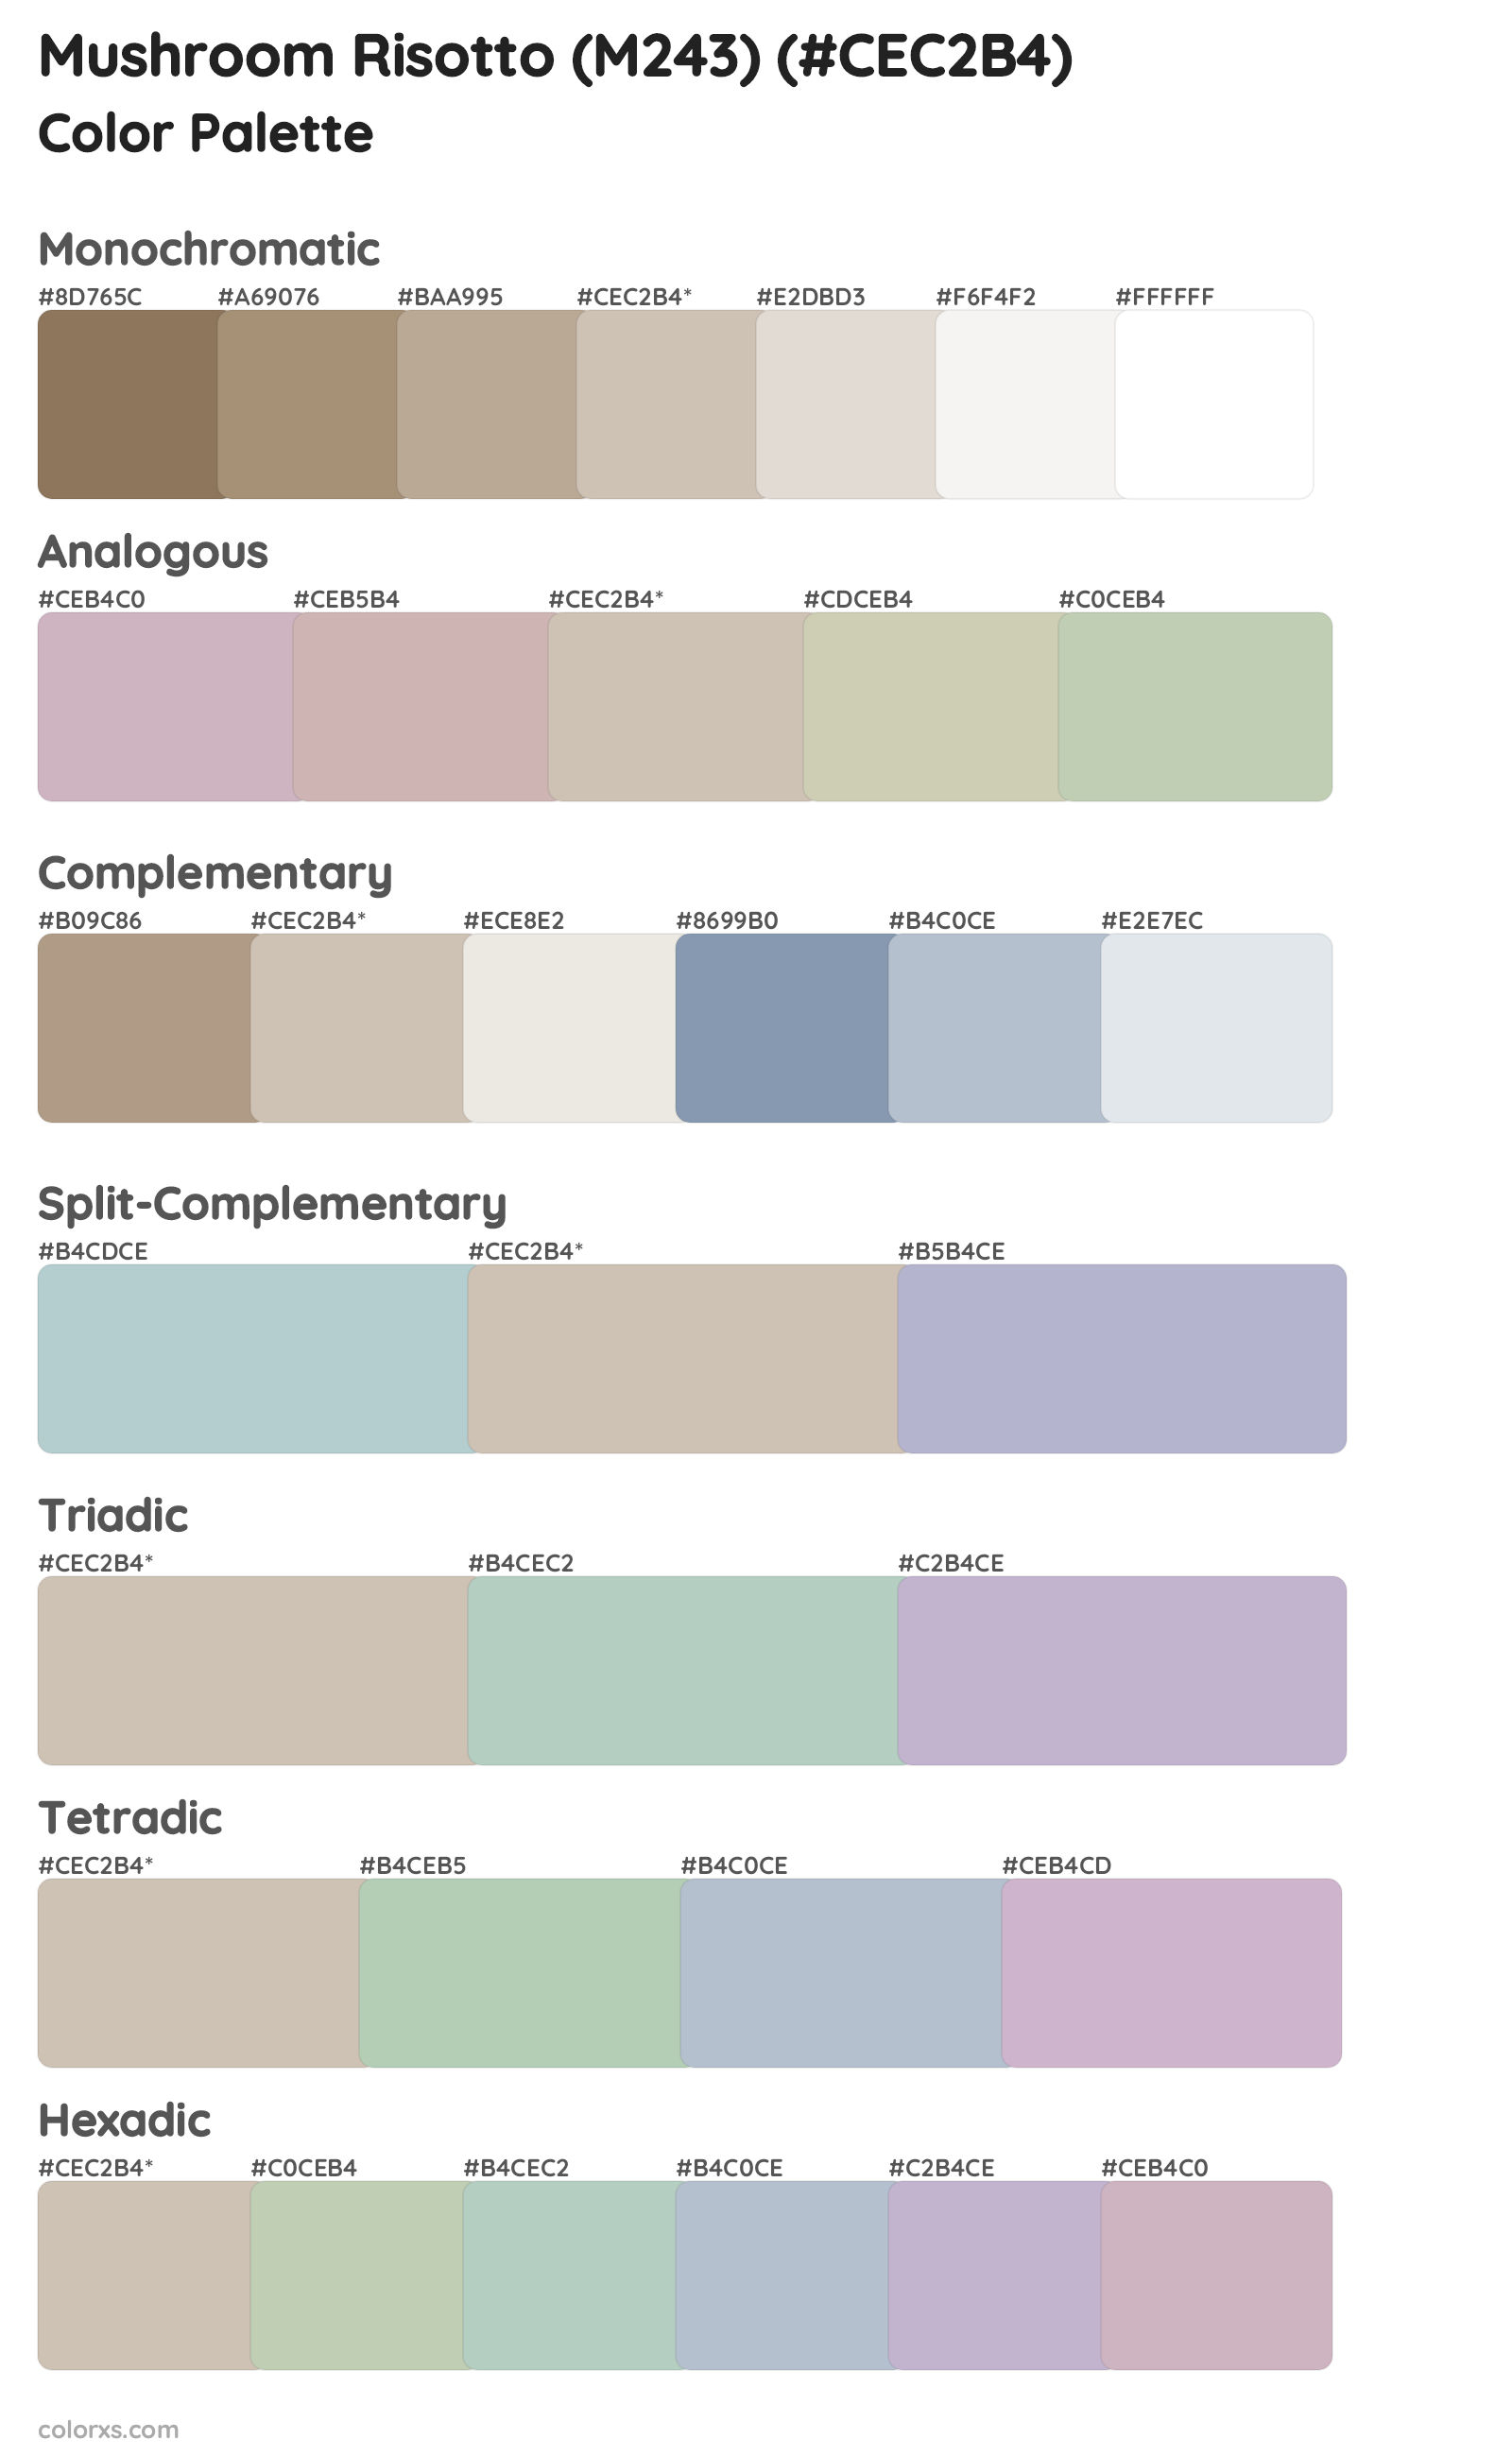 Mushroom Risotto (M243) Color Scheme Palettes